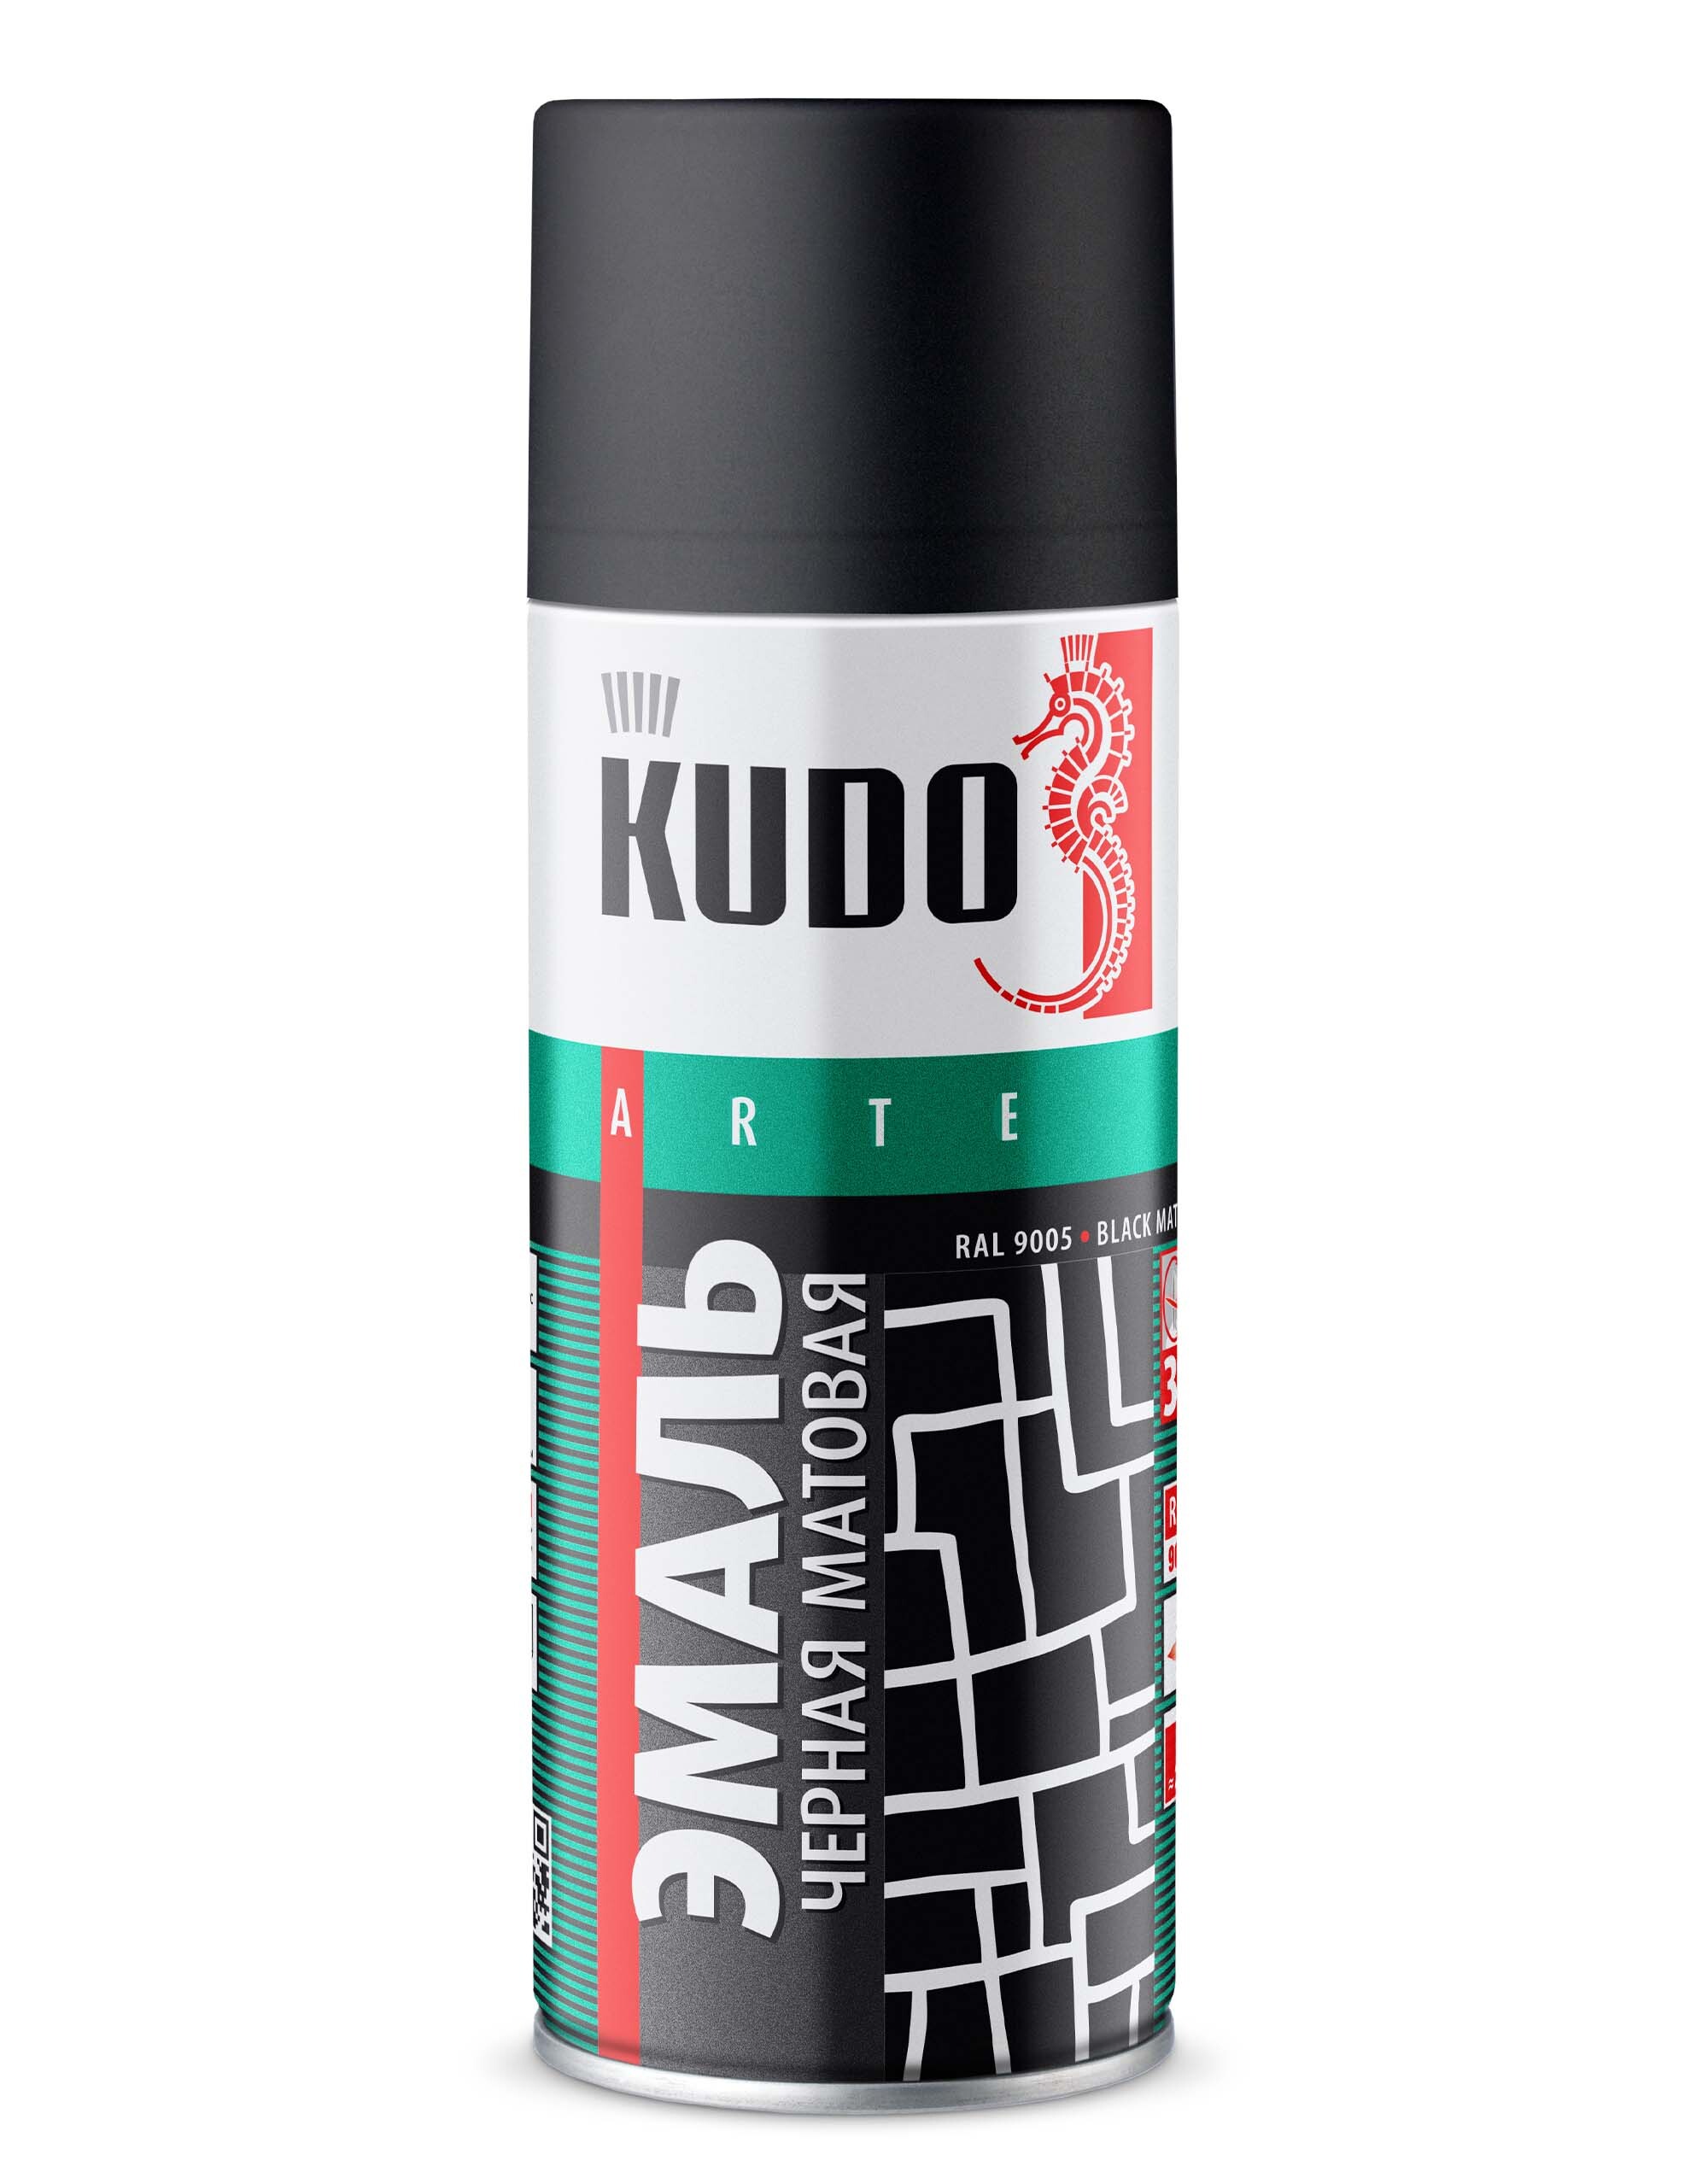 Ku1002 Kudo эмаль универсальная черная глянцевая (520 мл.) Kudo ku-1002